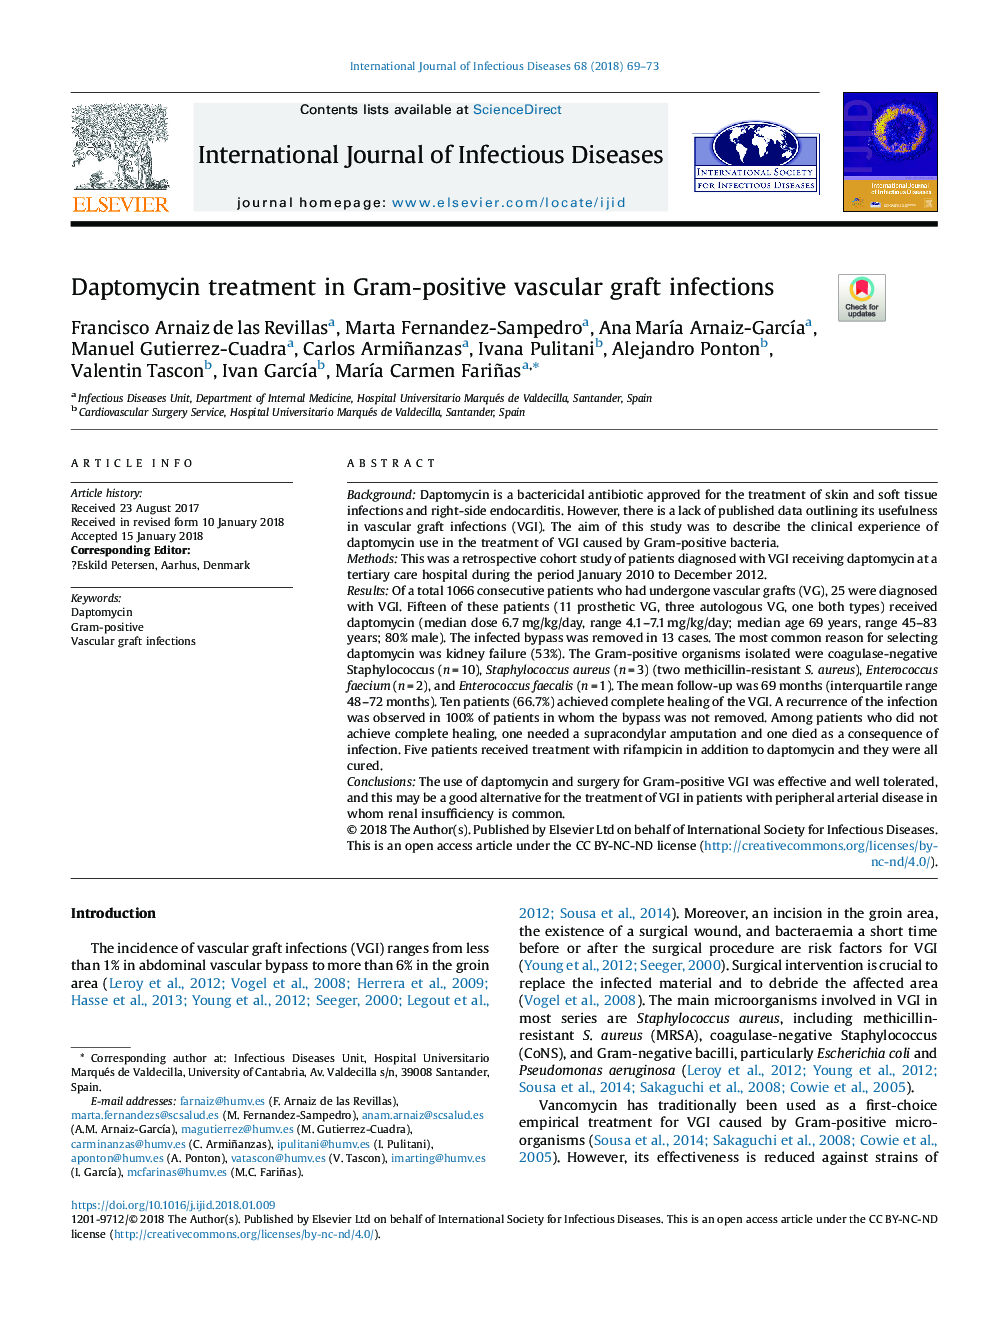 Daptomycin treatment in Gram-positive vascular graft infections